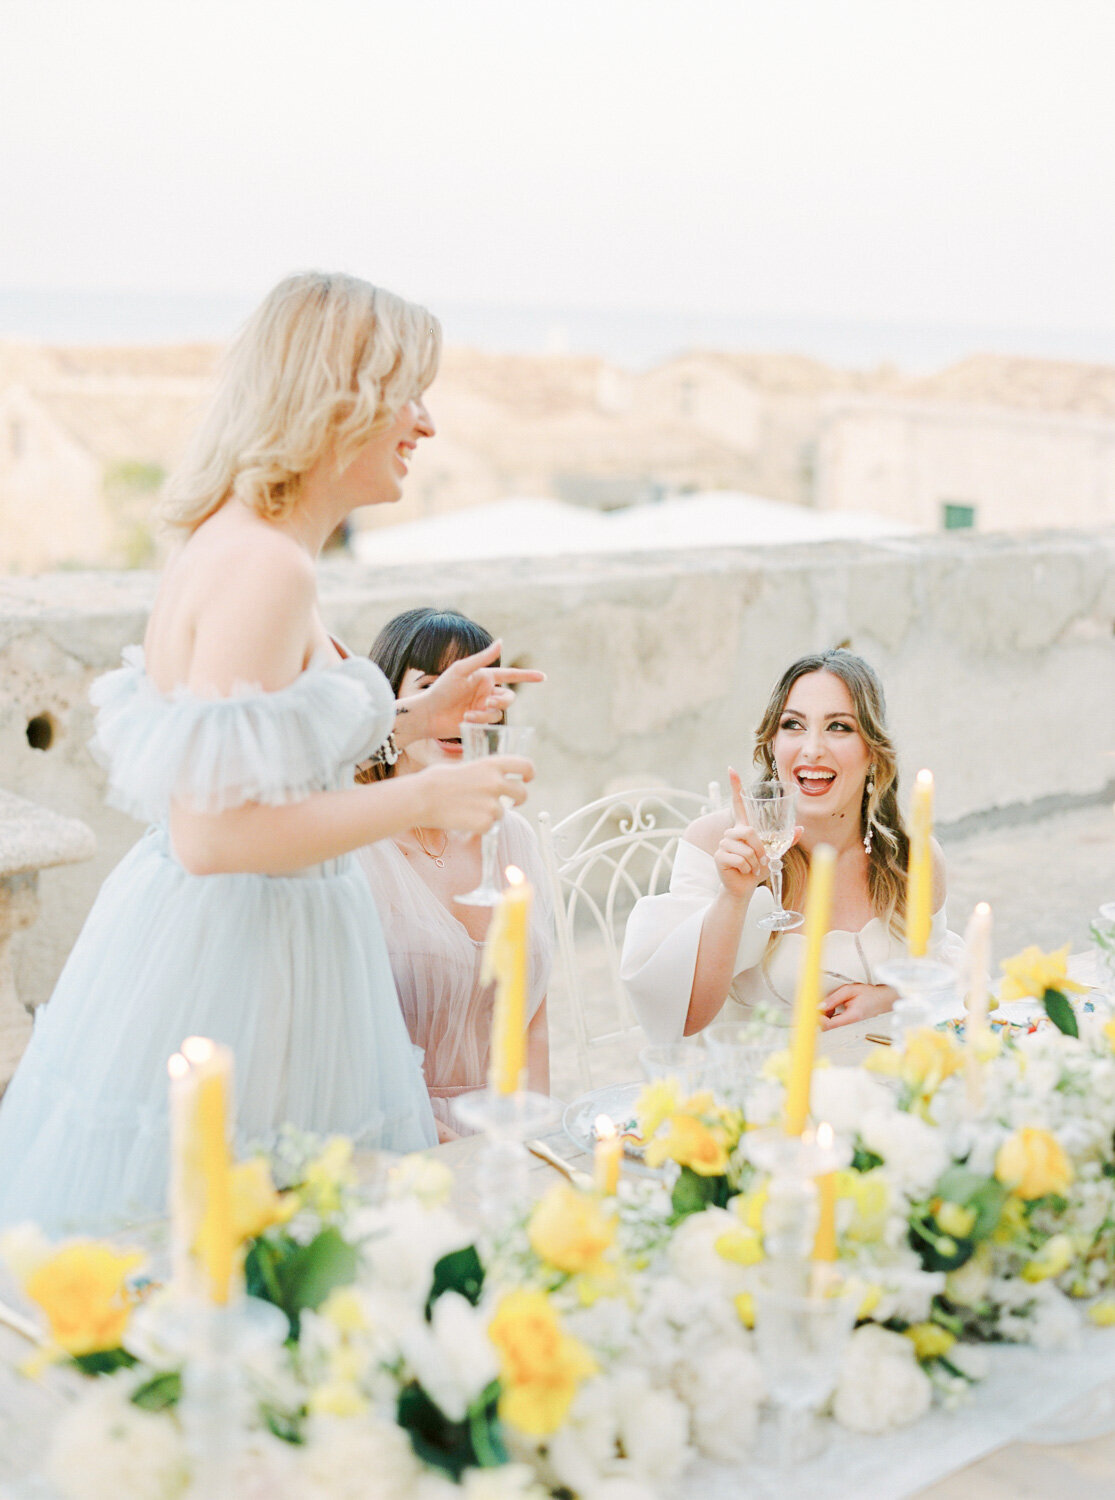 Wedding celebration in Sicily